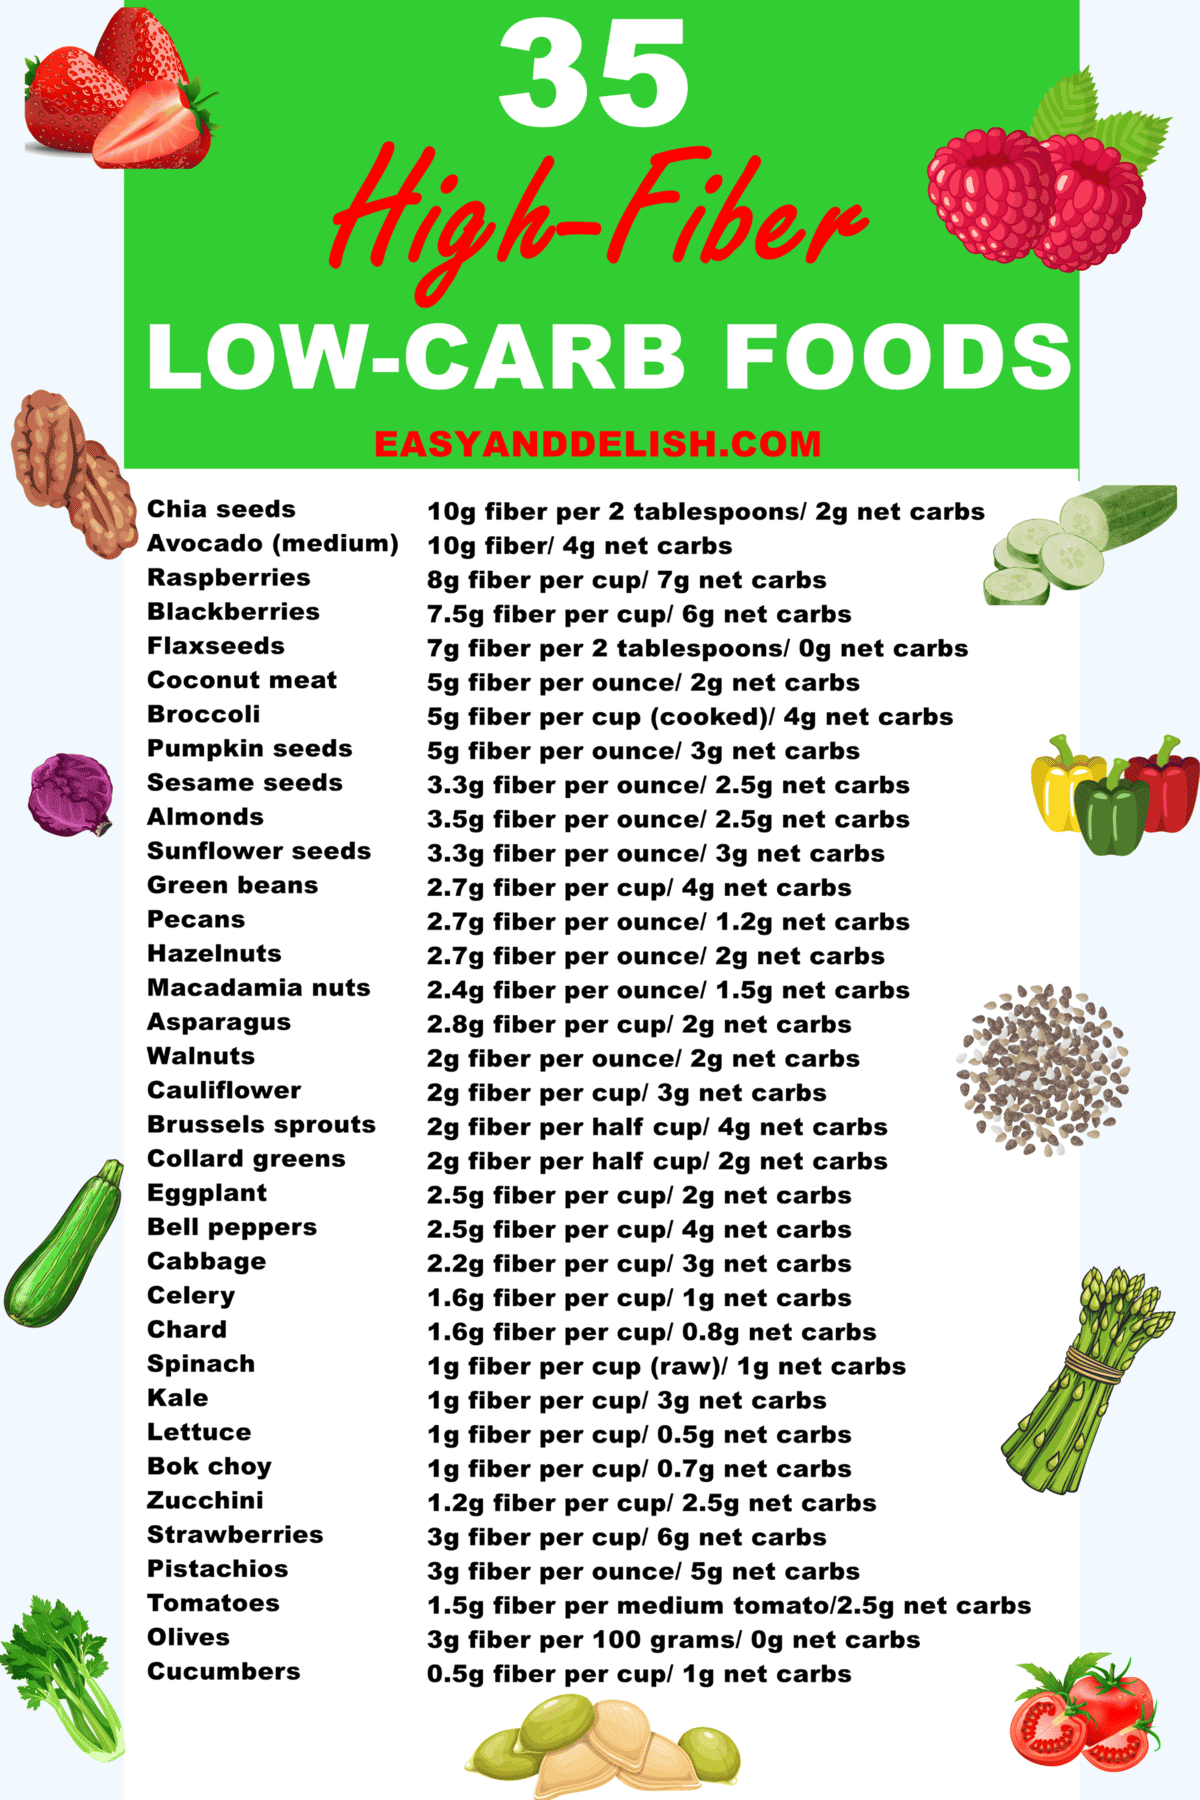 List of 35 high-fiber low-carb foods.